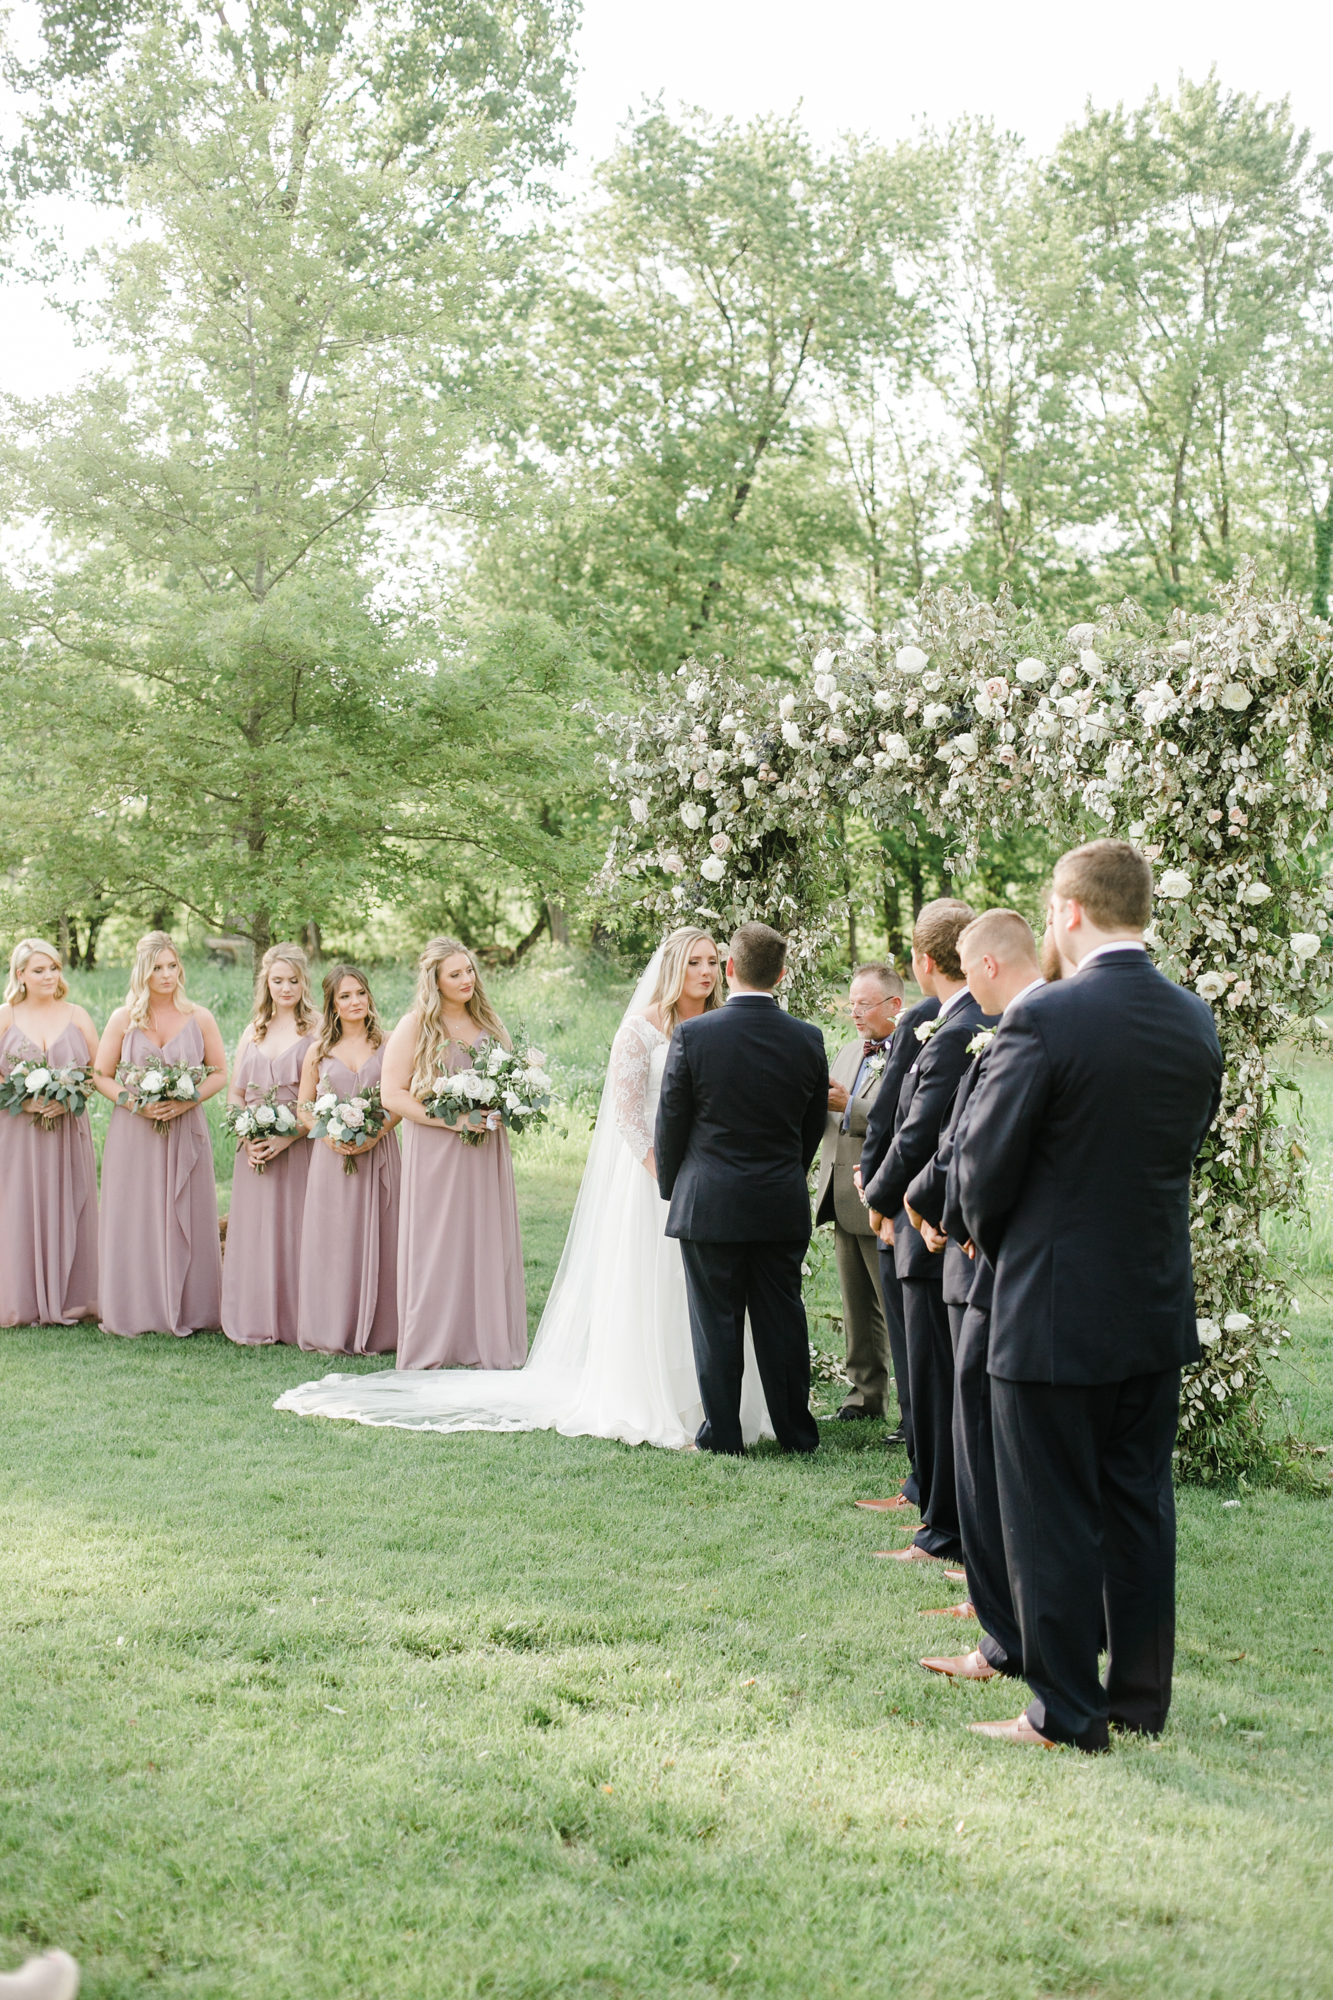 Natural, organic floral arch for the wedding ceremony backdrop // Nashville Wedding Florist